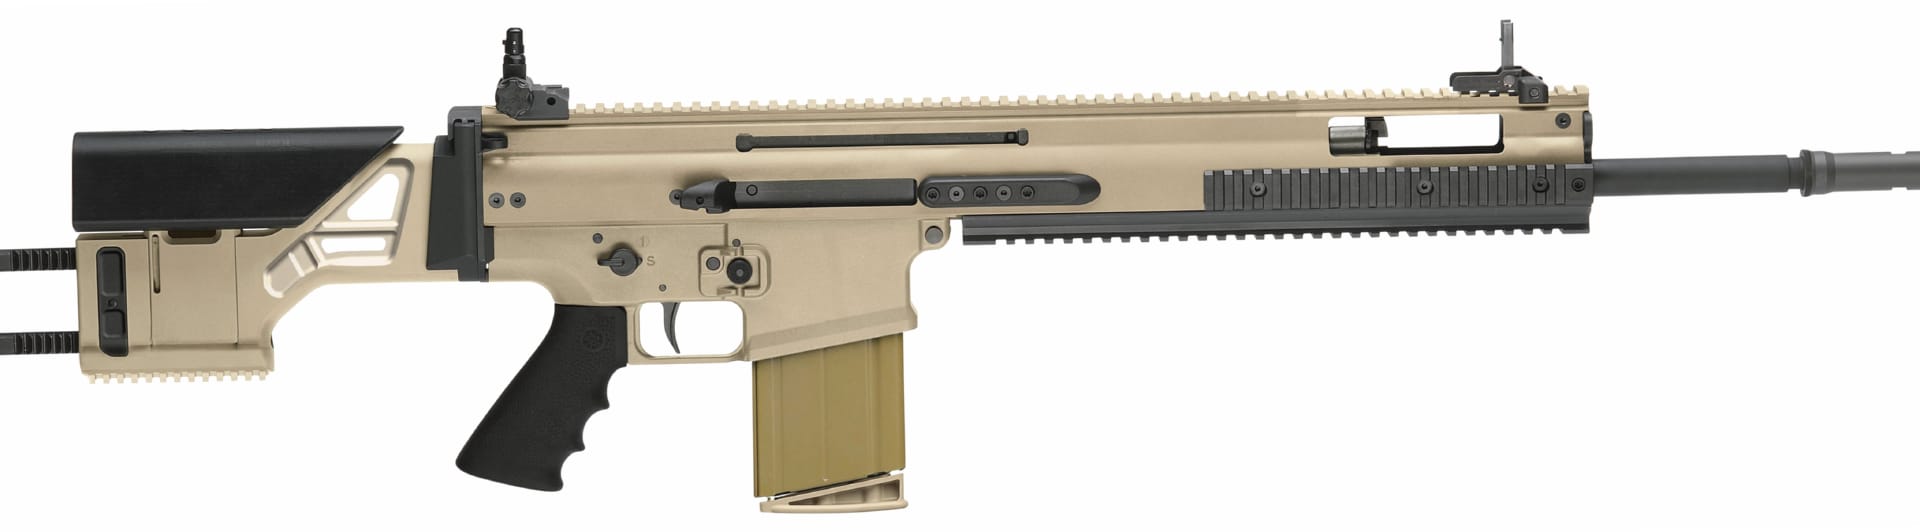 Mk 20 Ssr Assault Rifle at 1024 x 1024 iPad size wallpapers HD quality